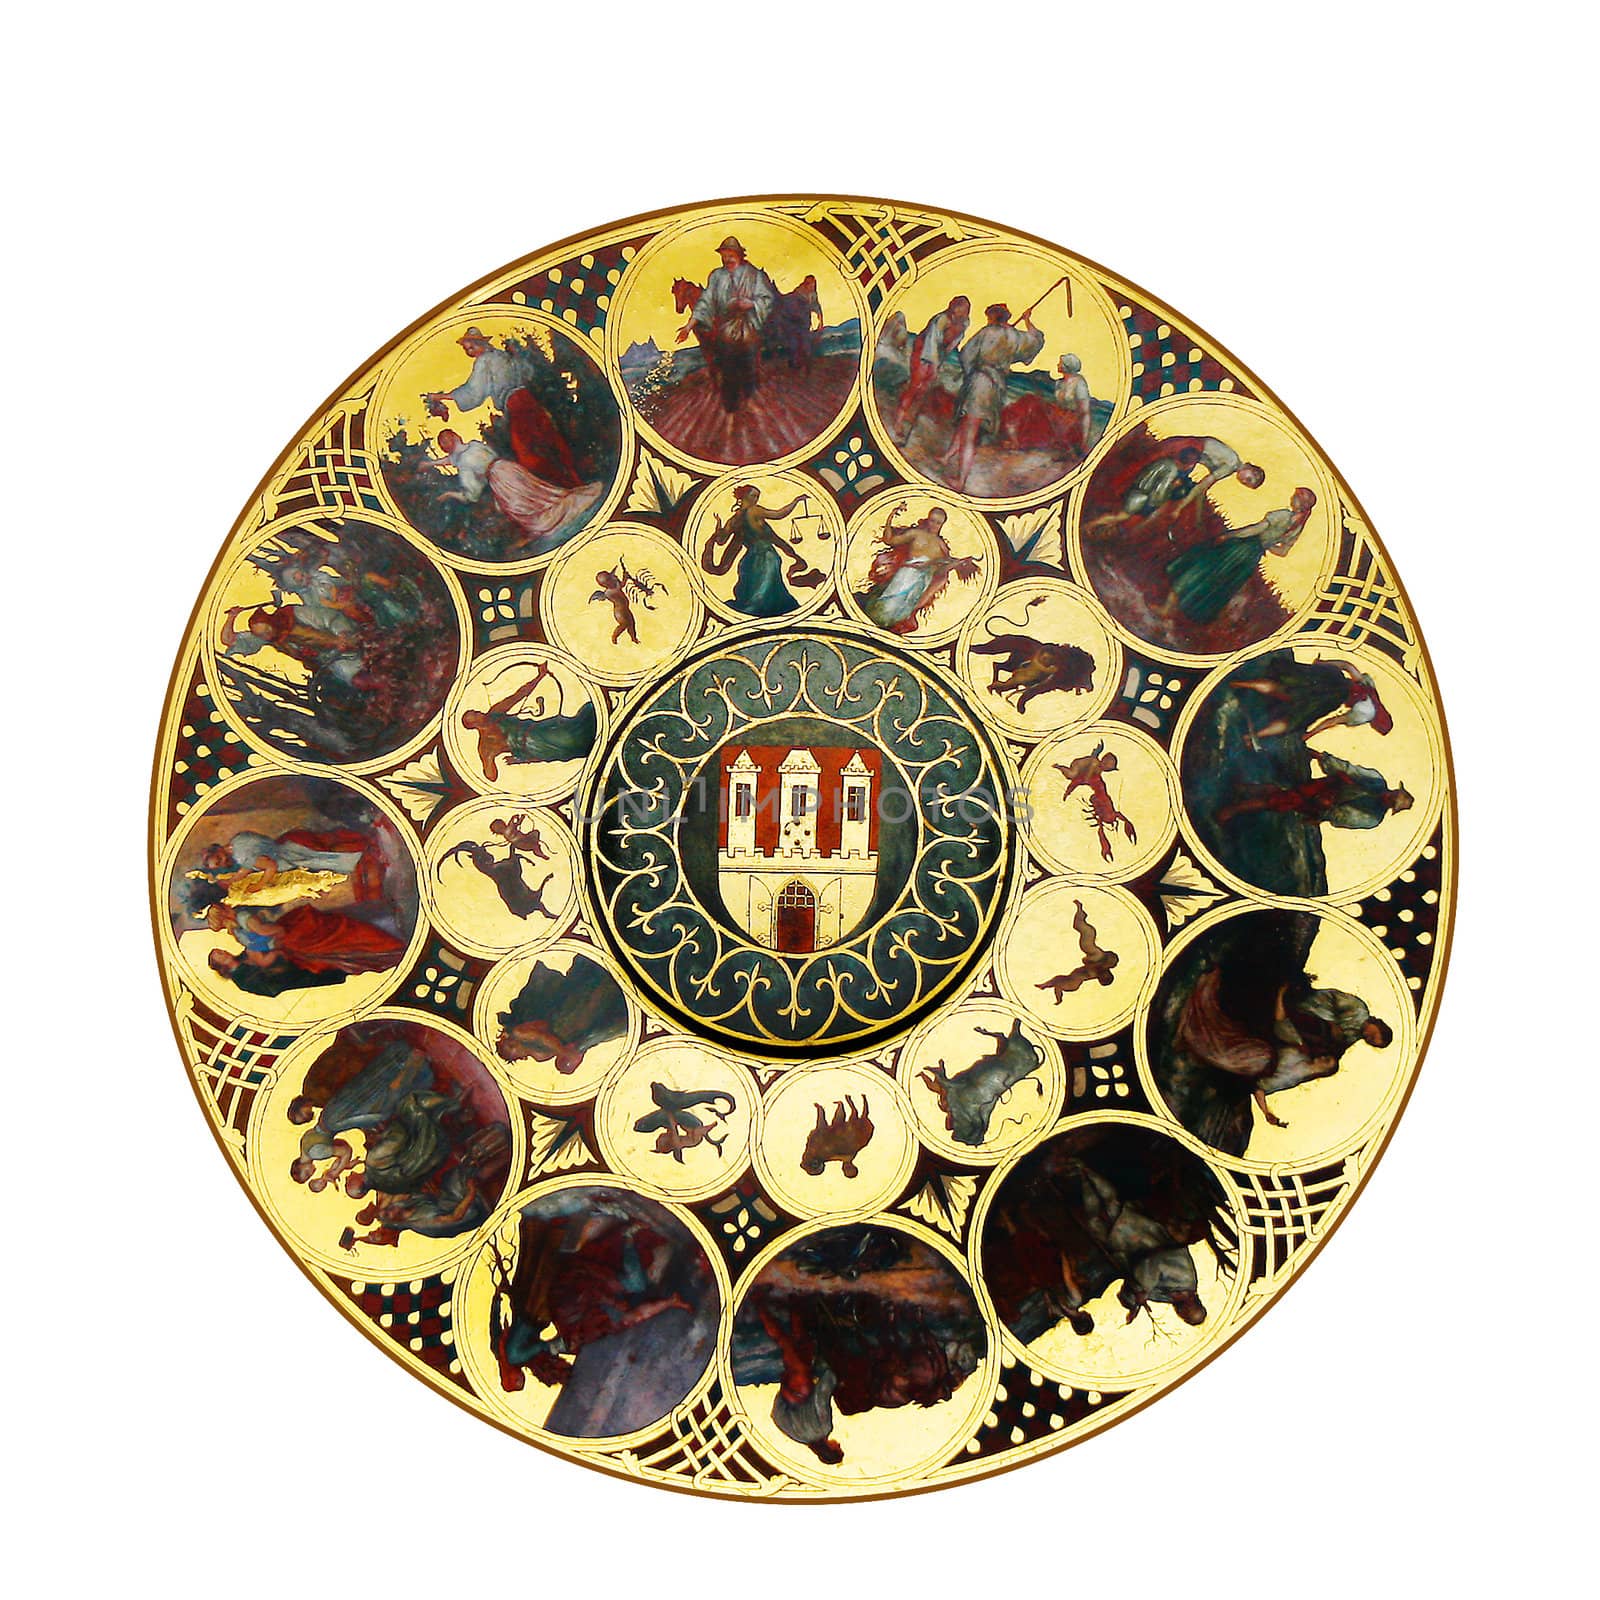 Zodiac from Astronomical clock, Prague, Czech Republic